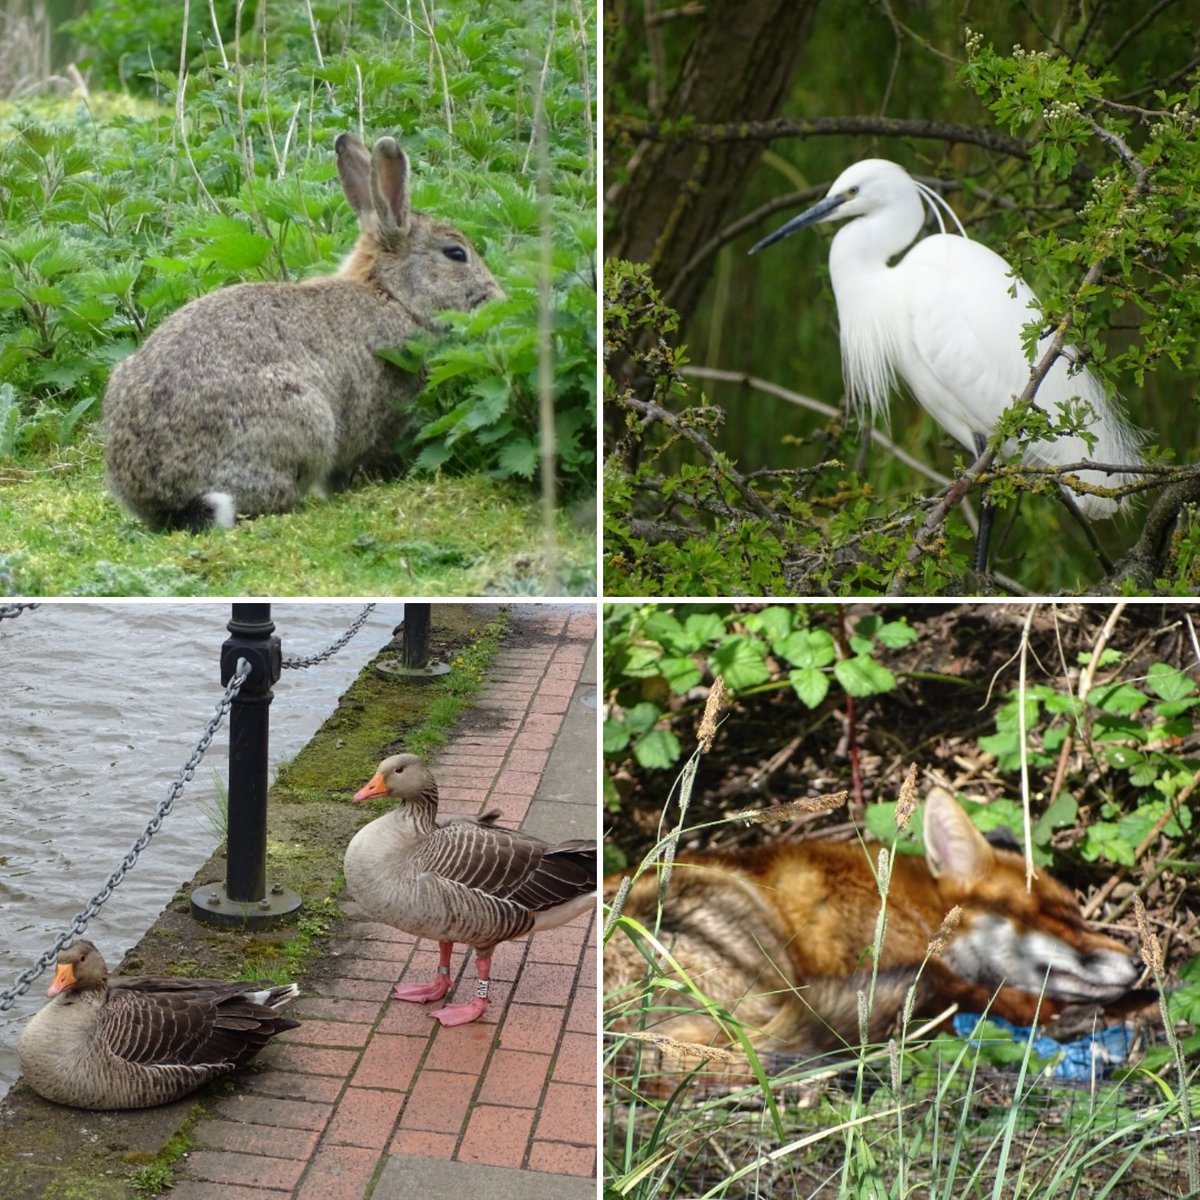 Urban wildlife in the centre of York today #rabbit #egret #geese #fox #wildlife #nature #citycentre #york #yorkcity #urban #urbanwildlife #spring